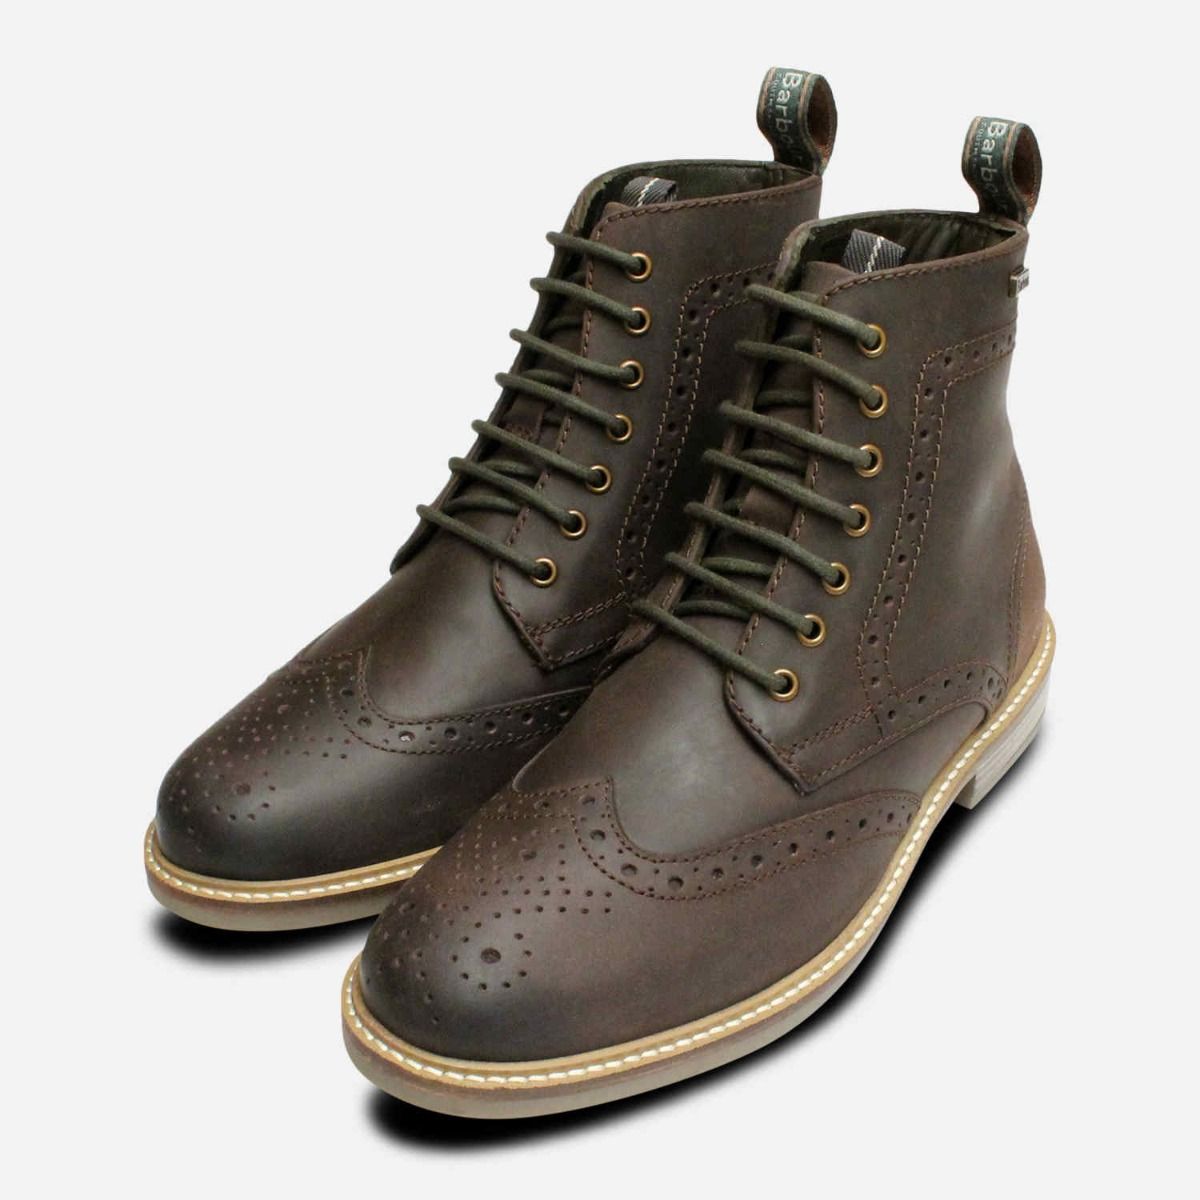 barbour belsay boots size 9